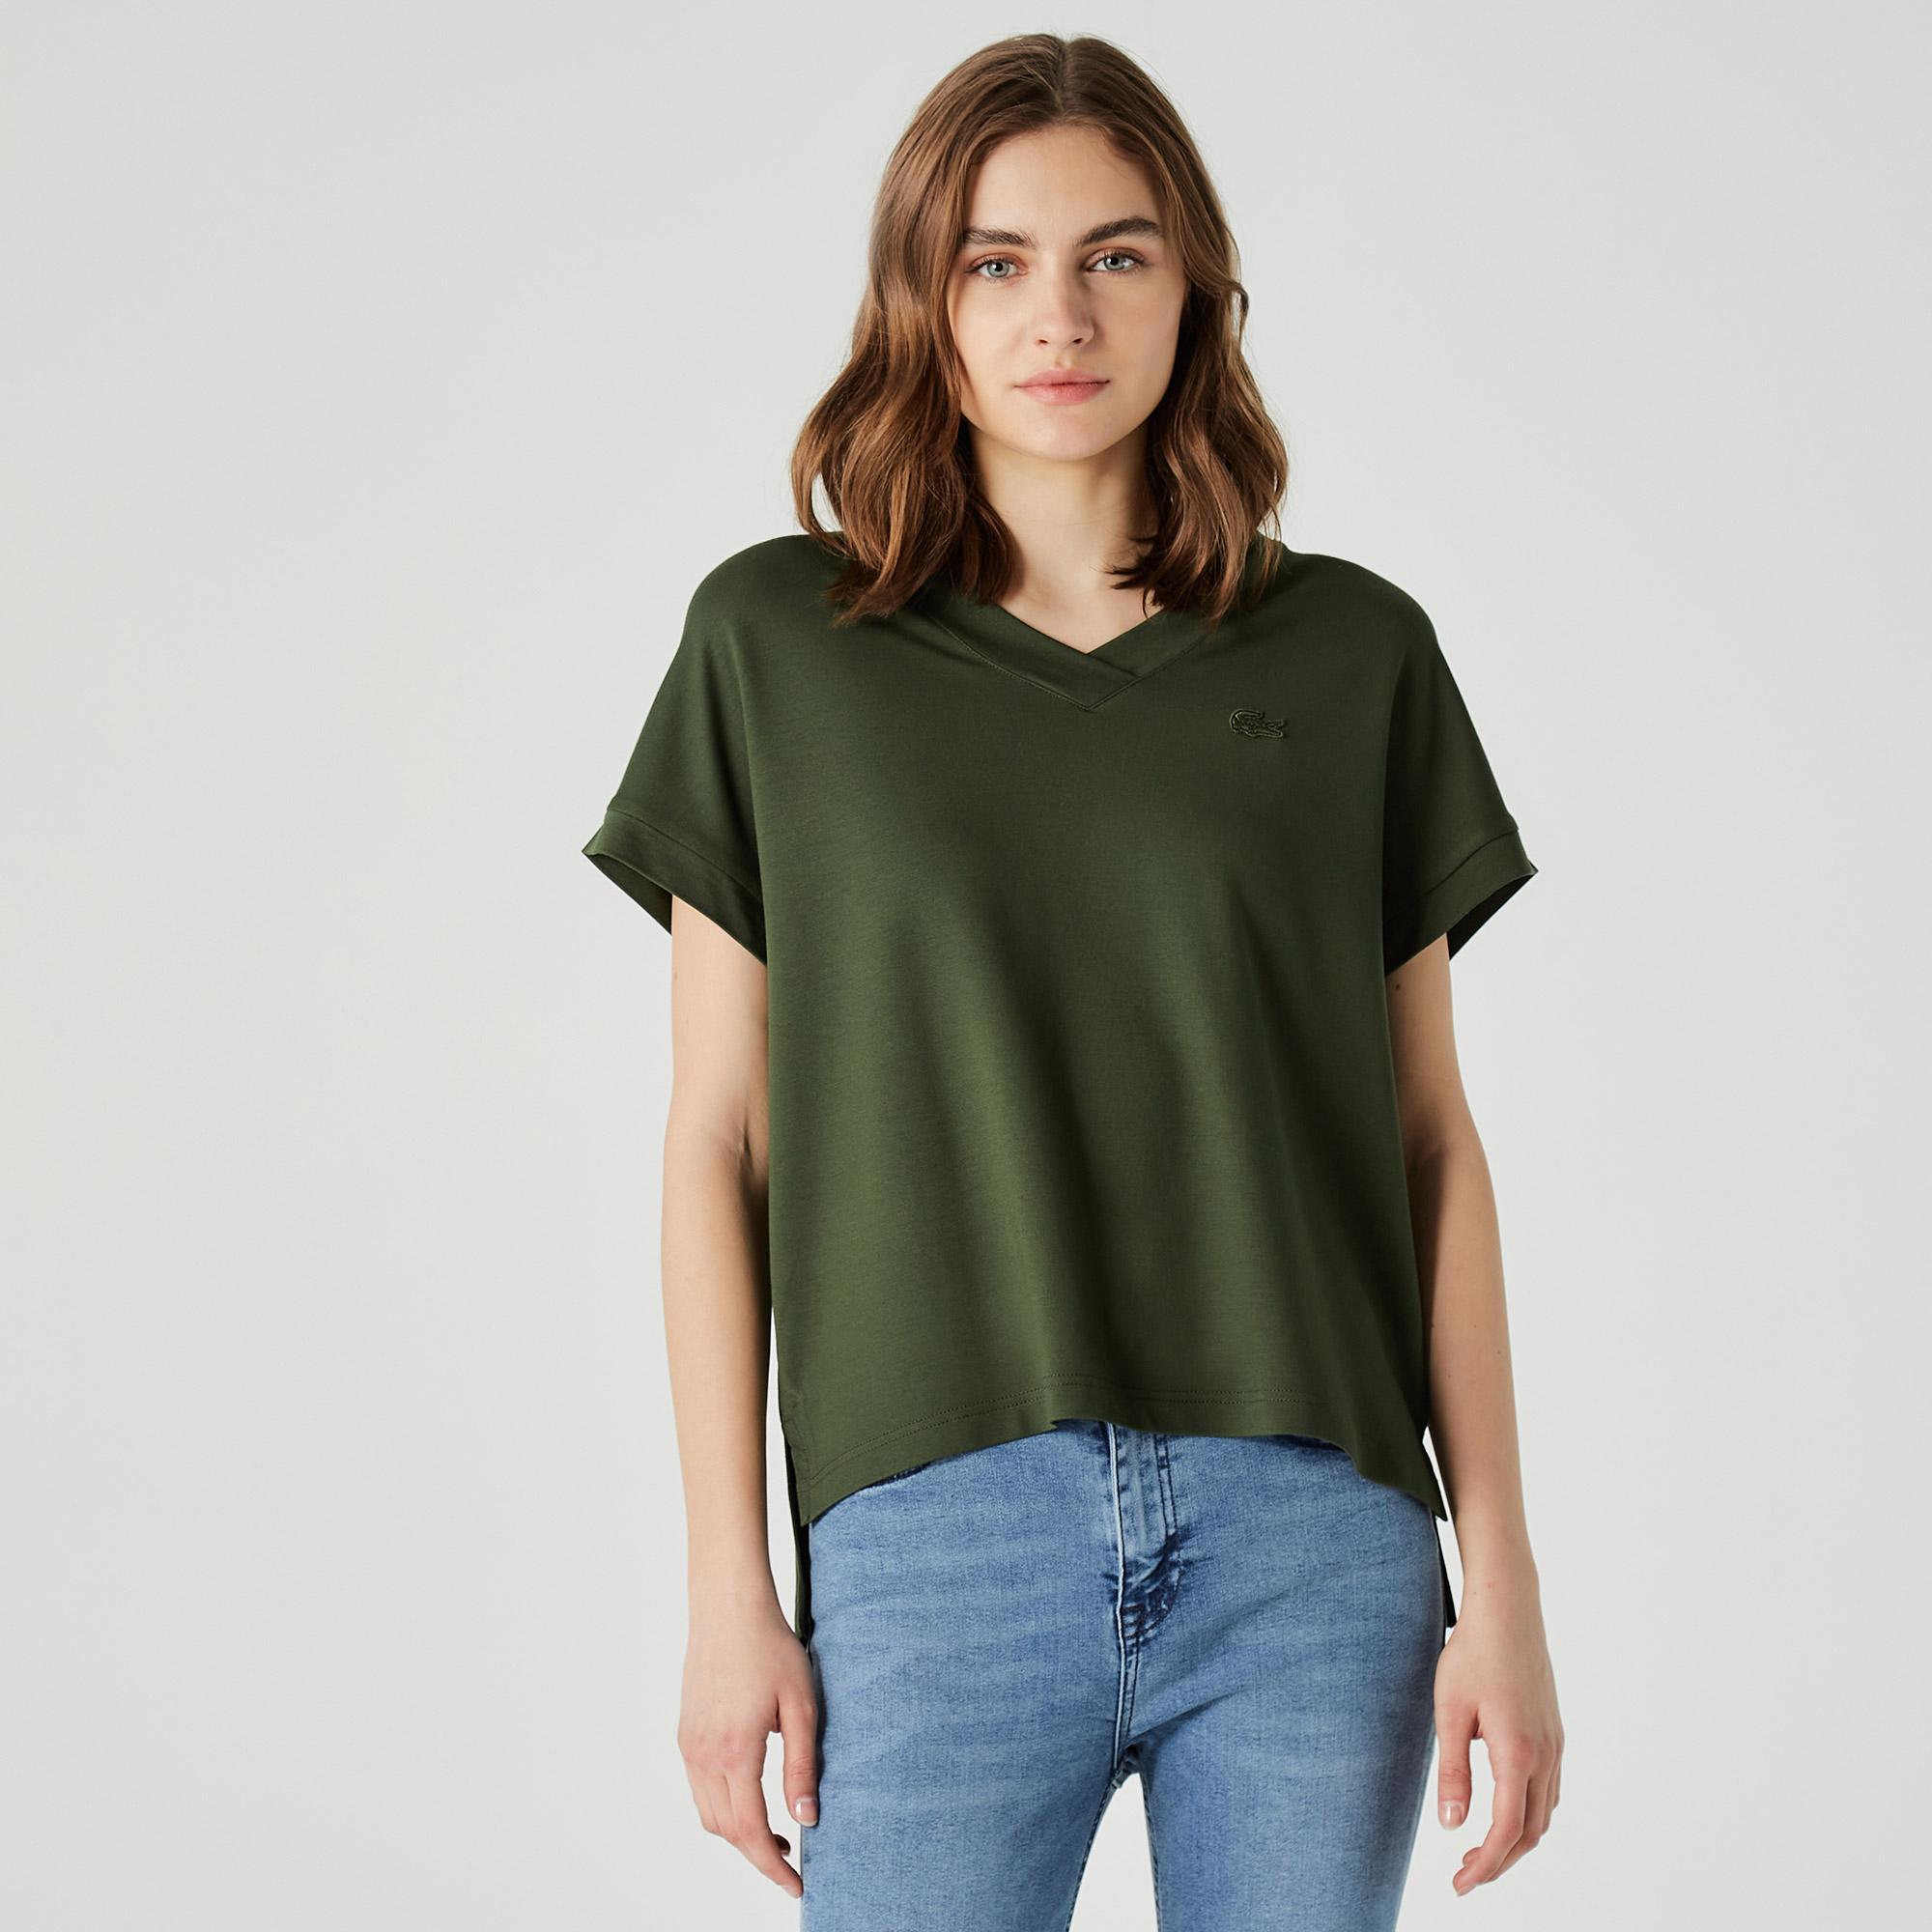 Lacoste Kadın Relaxed Fit V Yaka Koyu Yeşil T-Shirt. 2